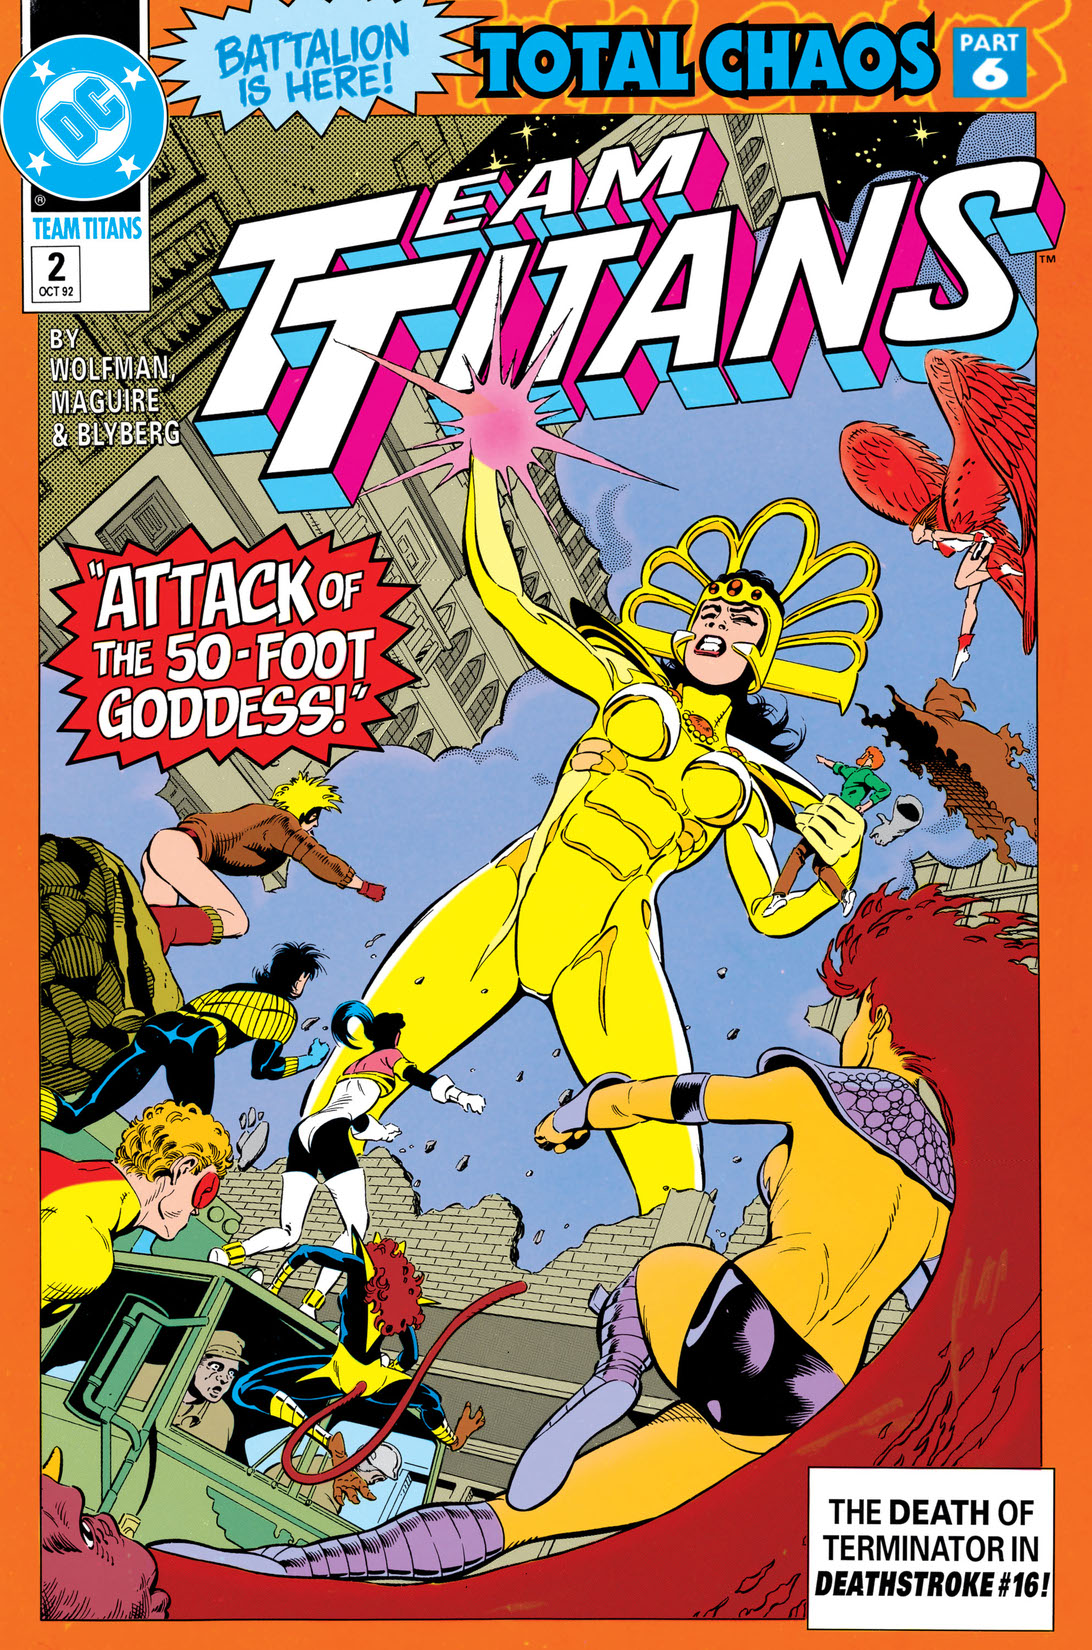 Team Titans #2 preview images